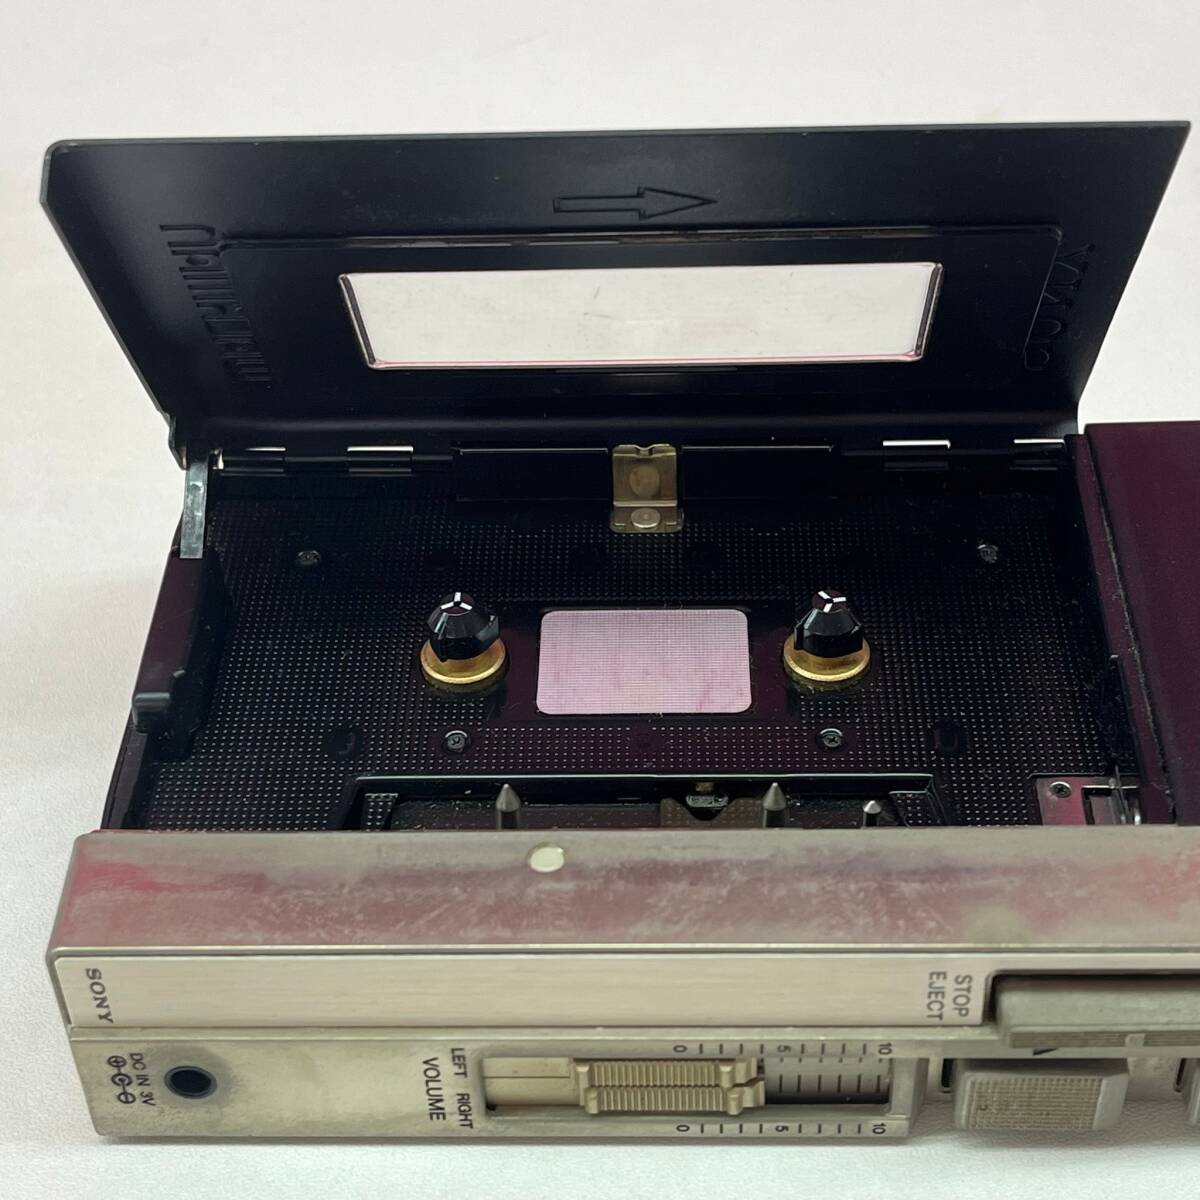 Y264-K32-3916 SONY Sony WALKMAN Walkman стерео кассетная магнитола WM-3 METAL metal чёрный черный мягкий чехол .